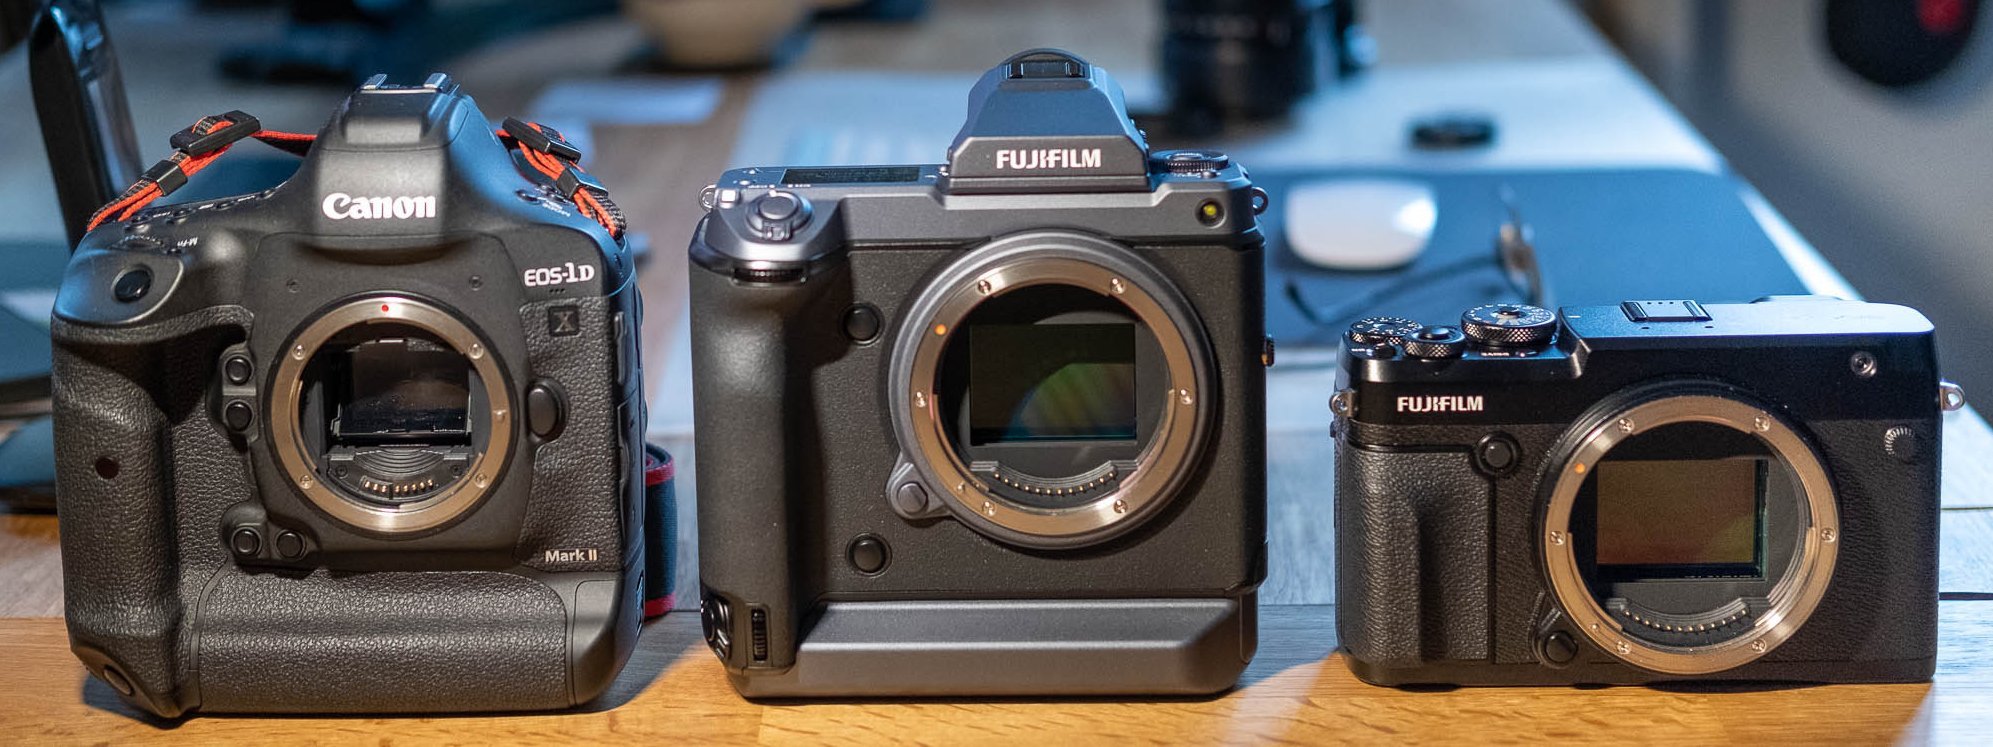 Fujifilm GFX 100 im Vergleich mit Canon EOS 1DX und Fujifilm GFX 50R